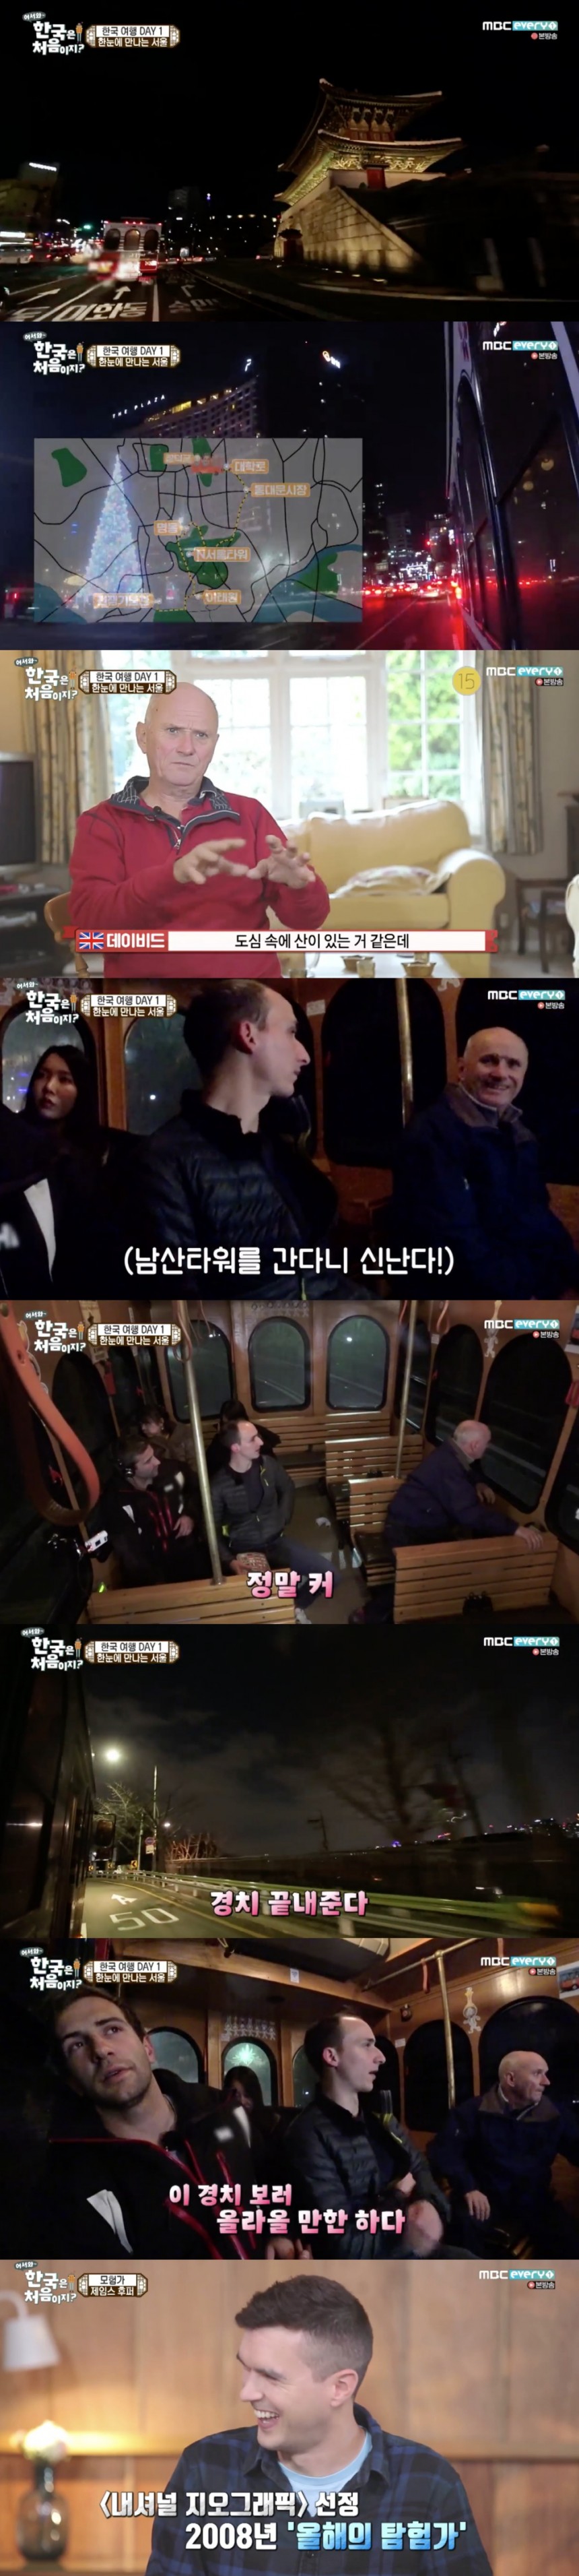 MBC every1 ‘어서와, 한국은 처음이지?’ 방송 캡쳐 